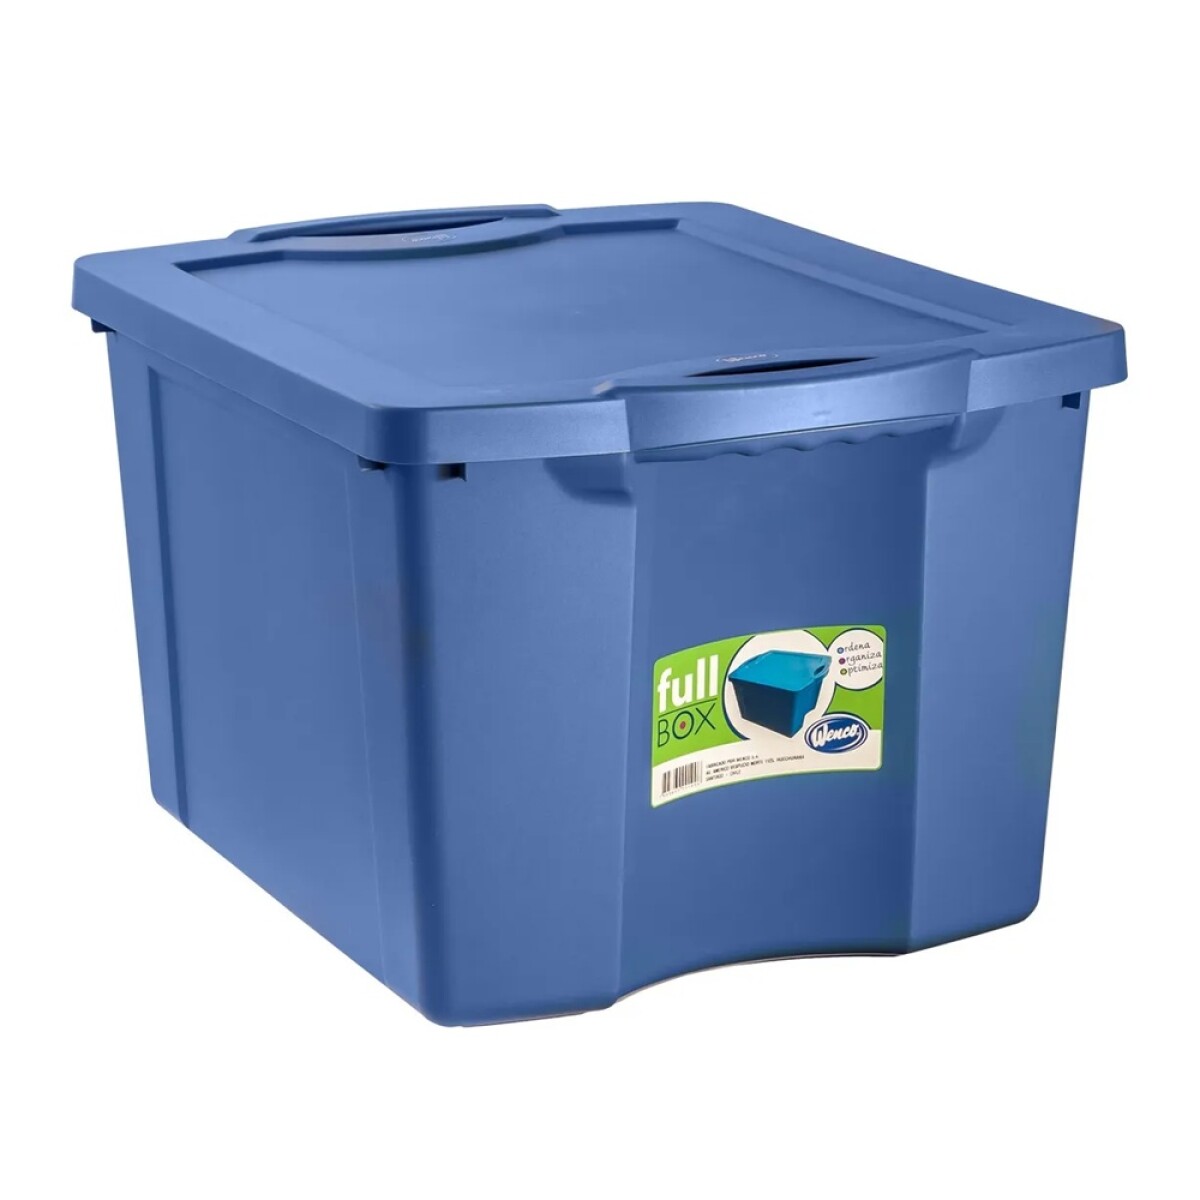 Caja Organizadora Full Box Wenco 75lts - Azul 